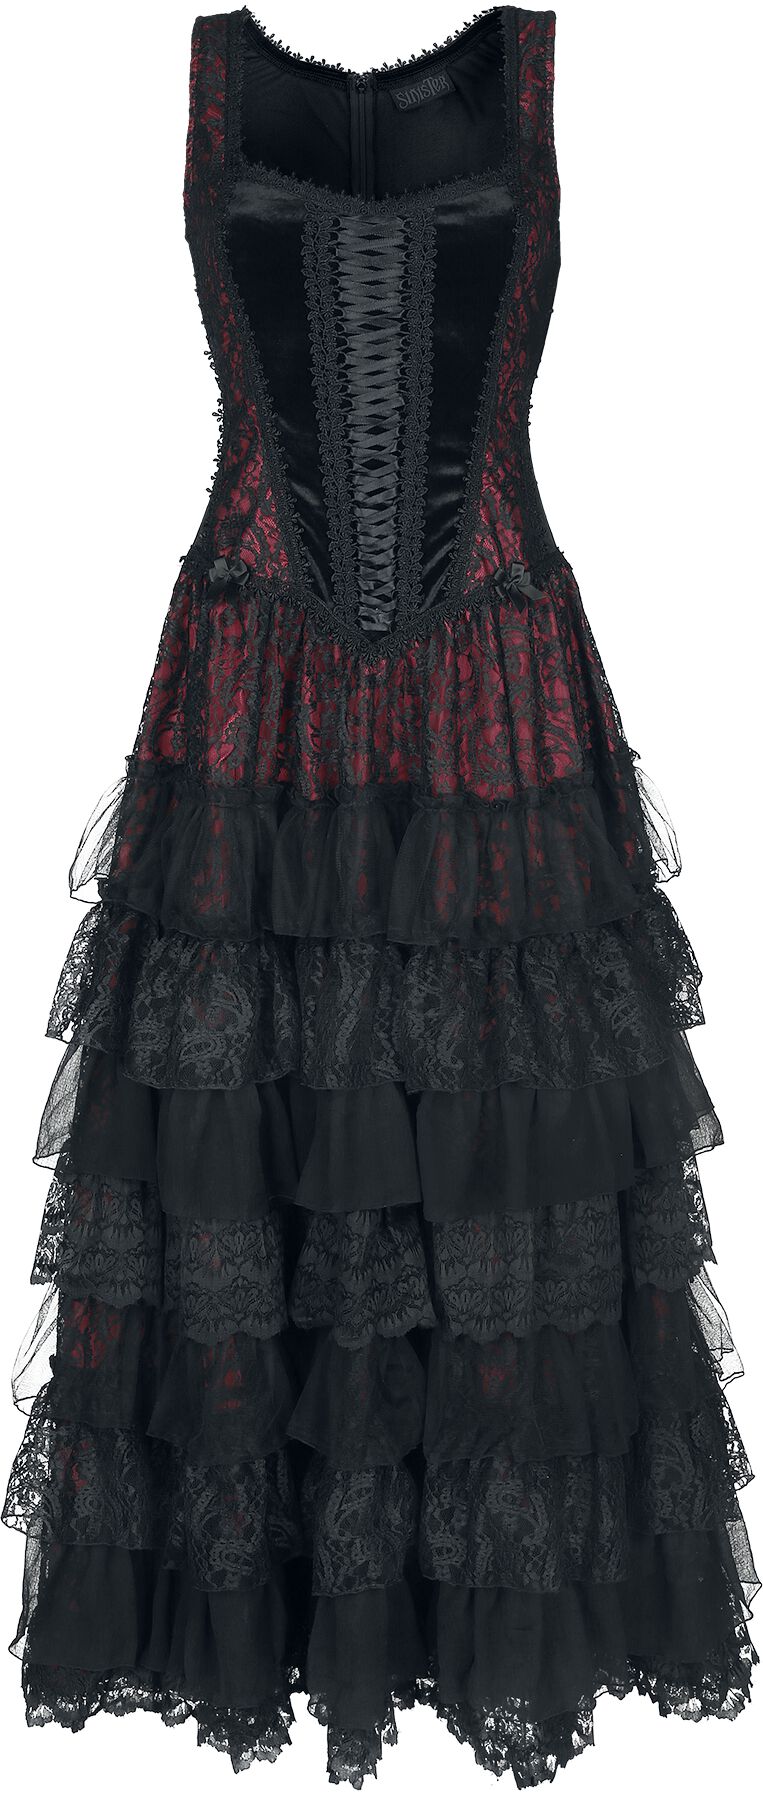 Sinister Gothic Gothic Dress Long dress black red